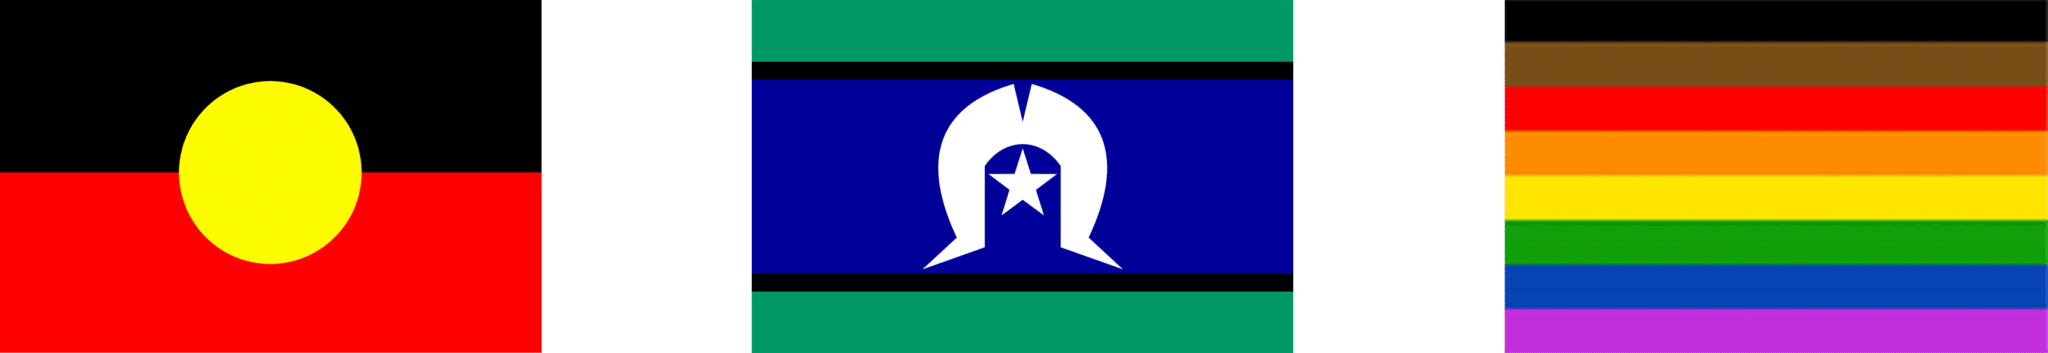 Aboriginal, Torres Strait Islander and LGBTQIA+ flags